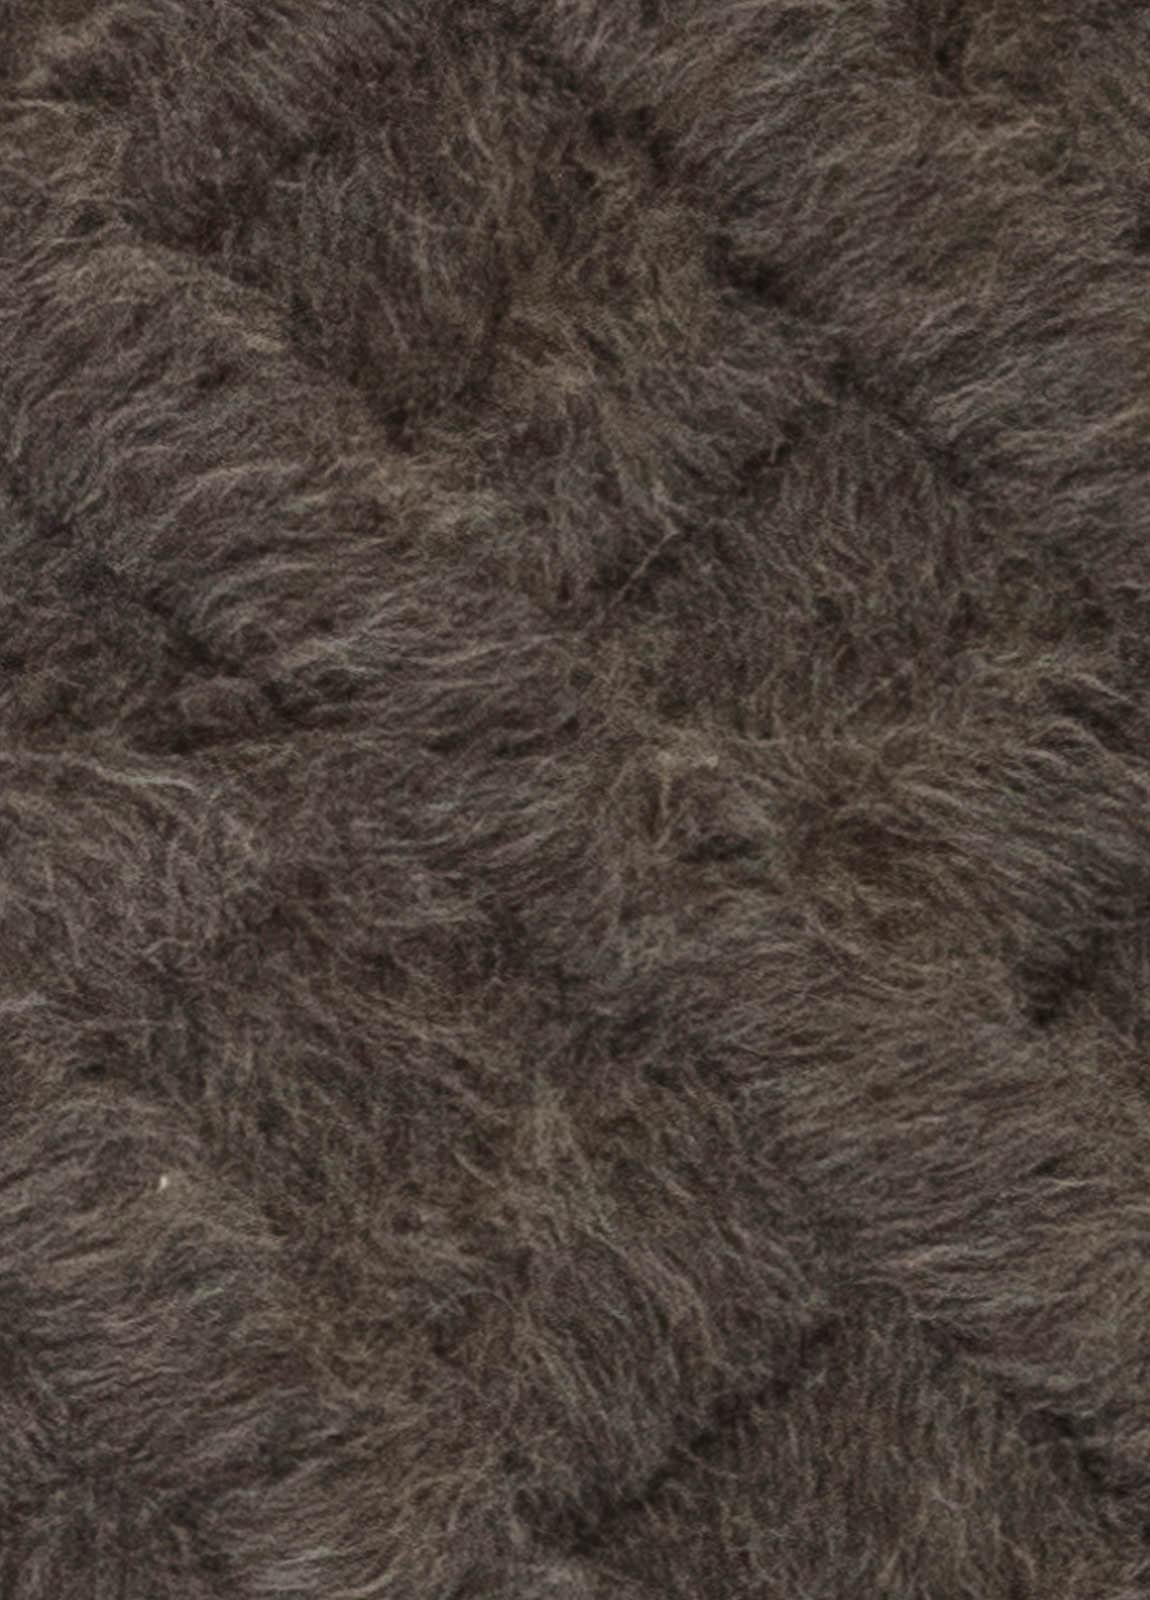 Taurus collection modern geometric brown goat hair rug by Doris Leslie Blau.
Size: 4.2